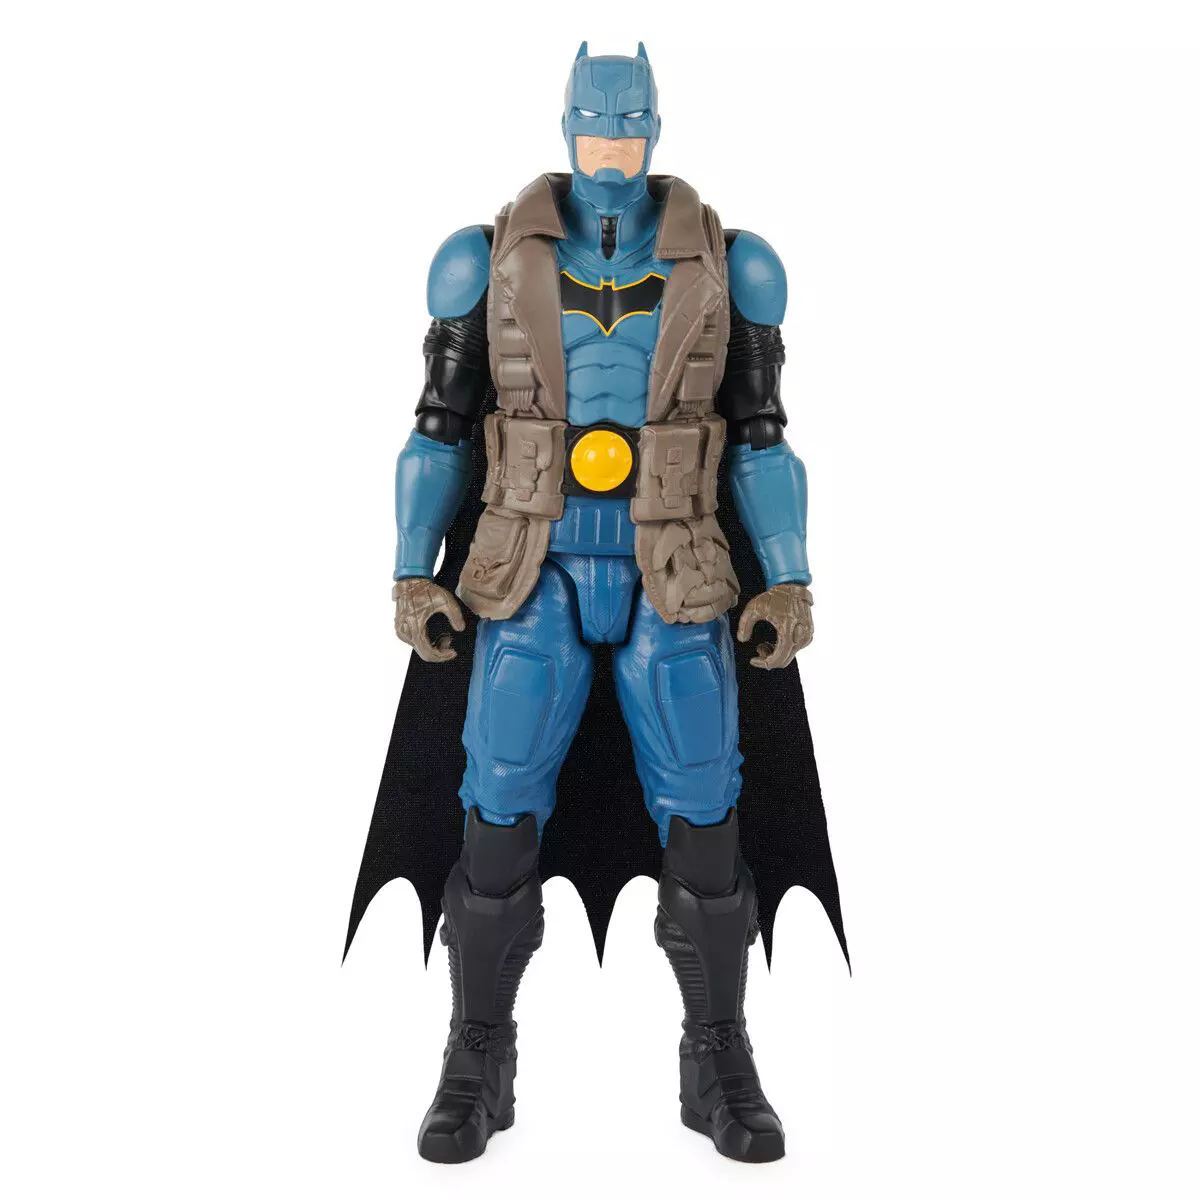 Batman Figure S10 Cm Batman 6069258